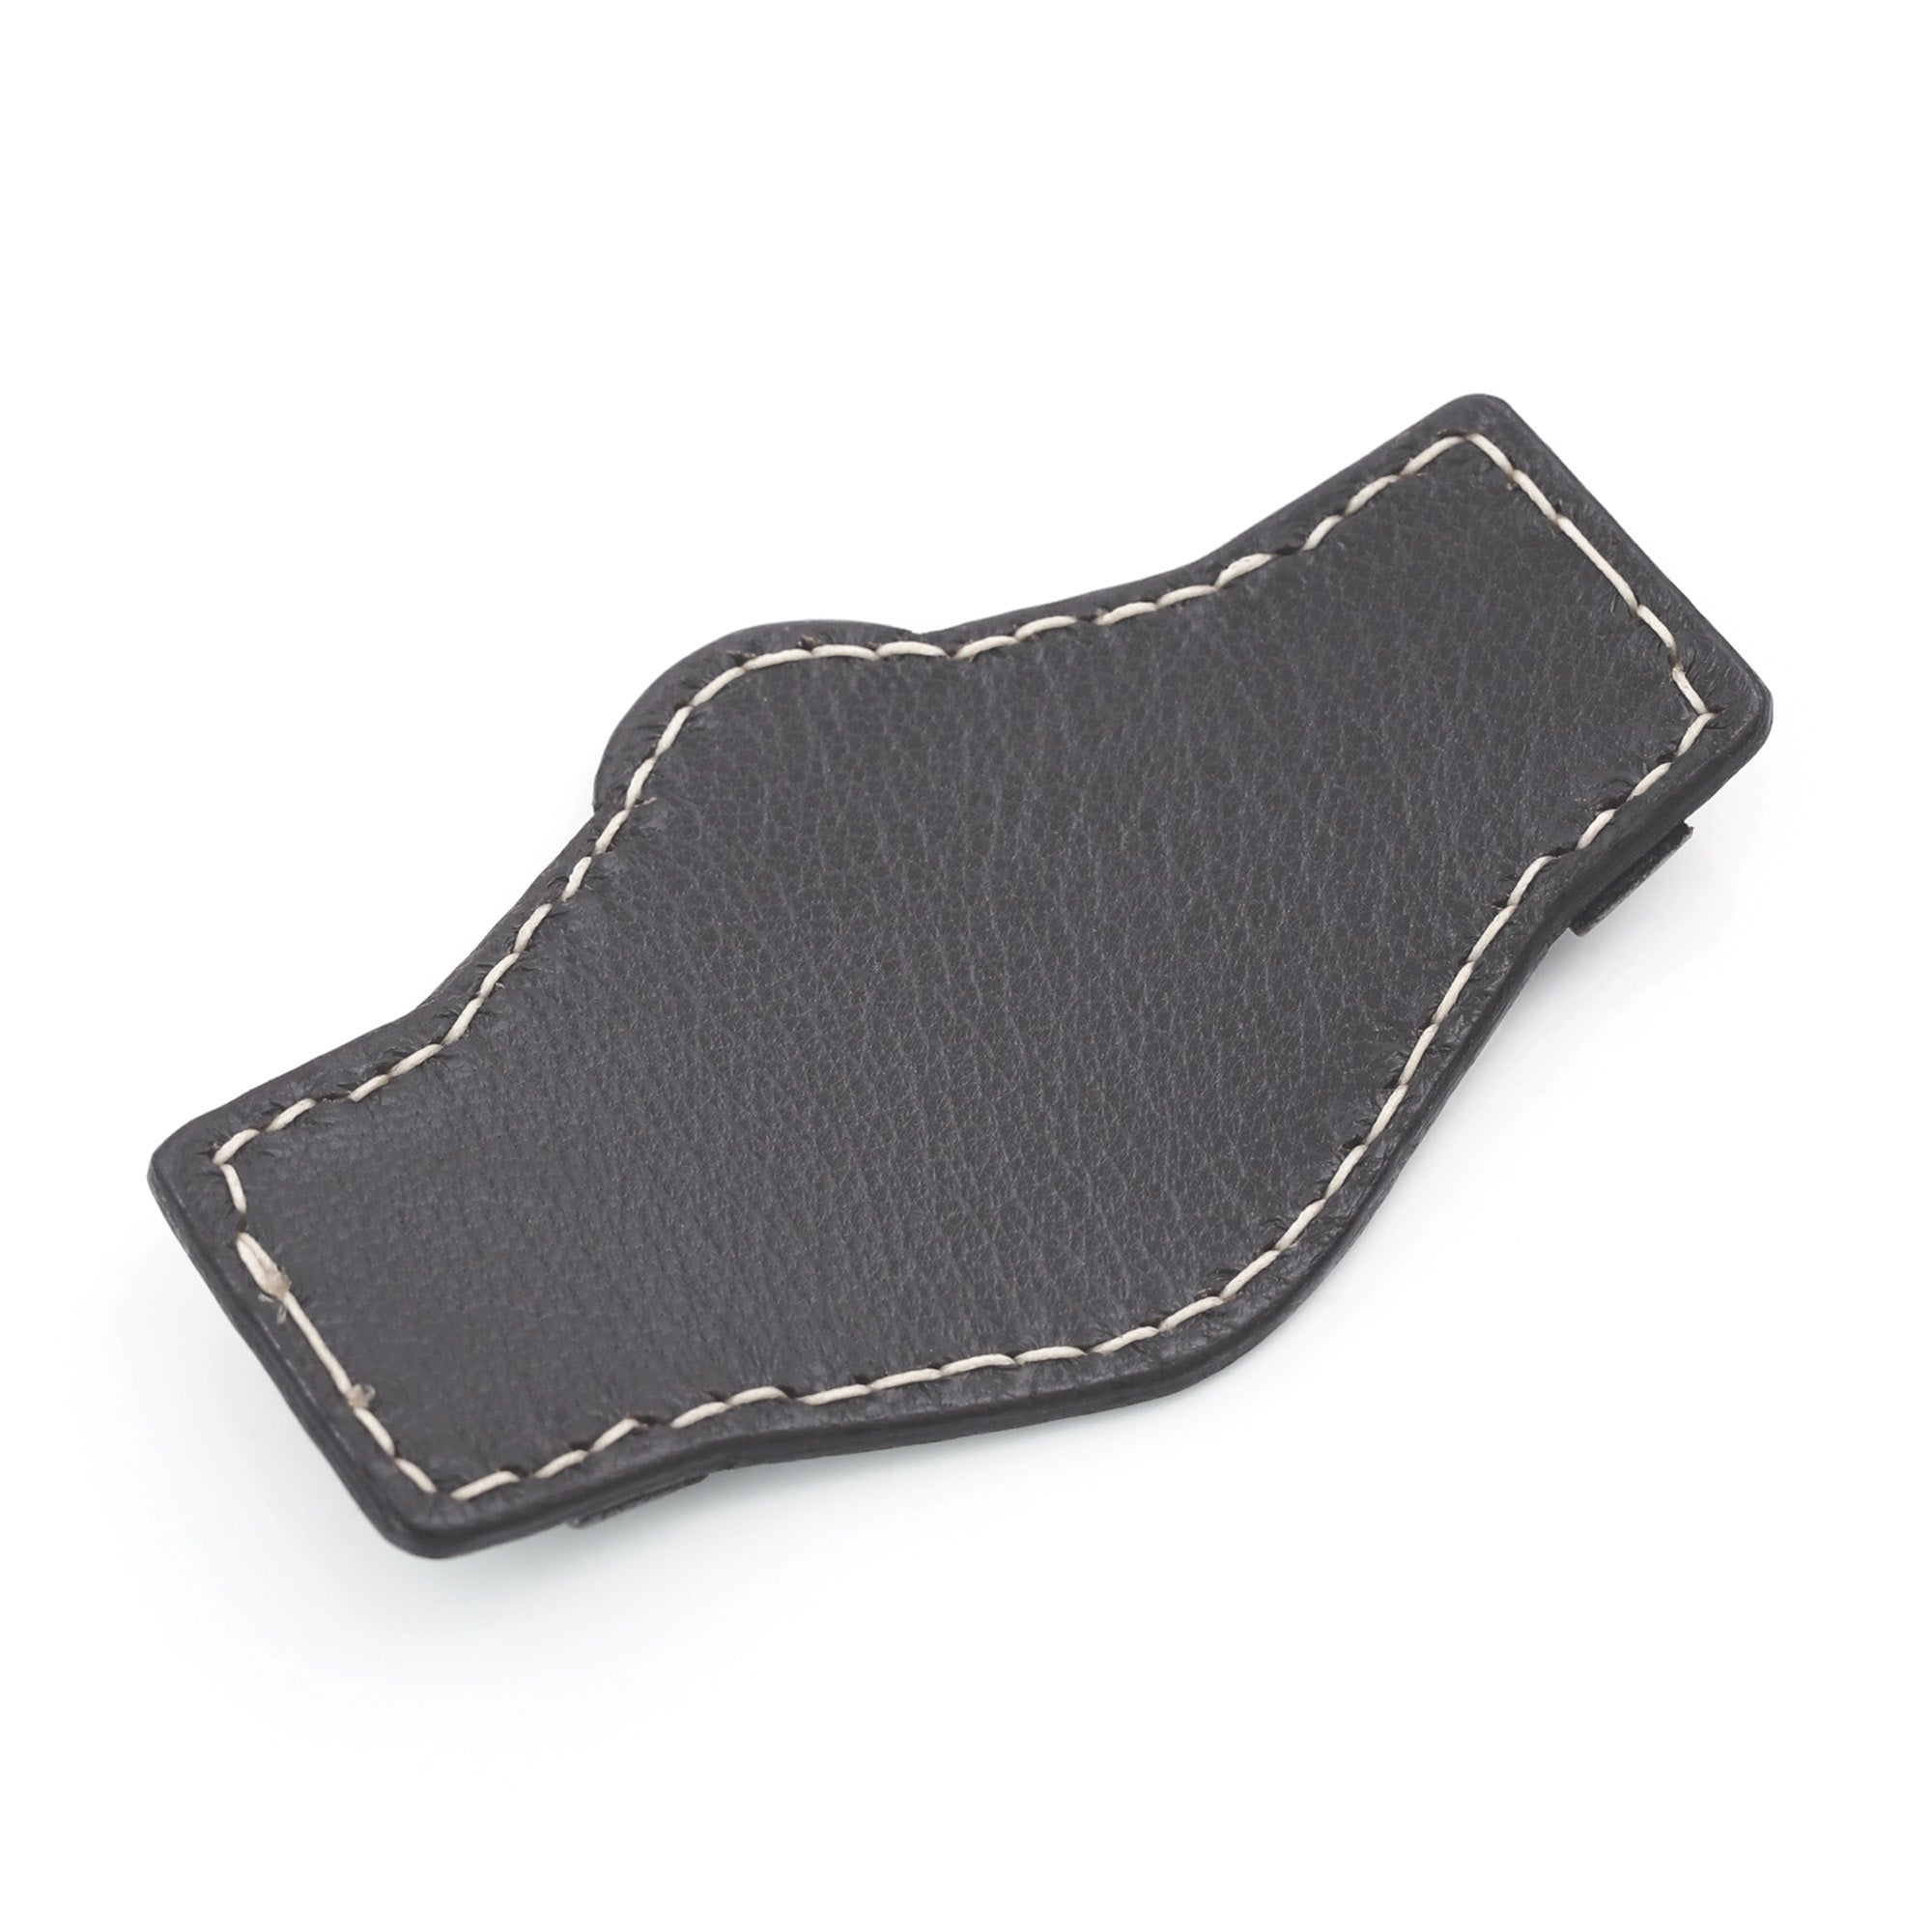 Military Grey Geniune Calf  Leather BUND Pad for 20mm or 22mm Watch Straps, Beige Wax Stitching